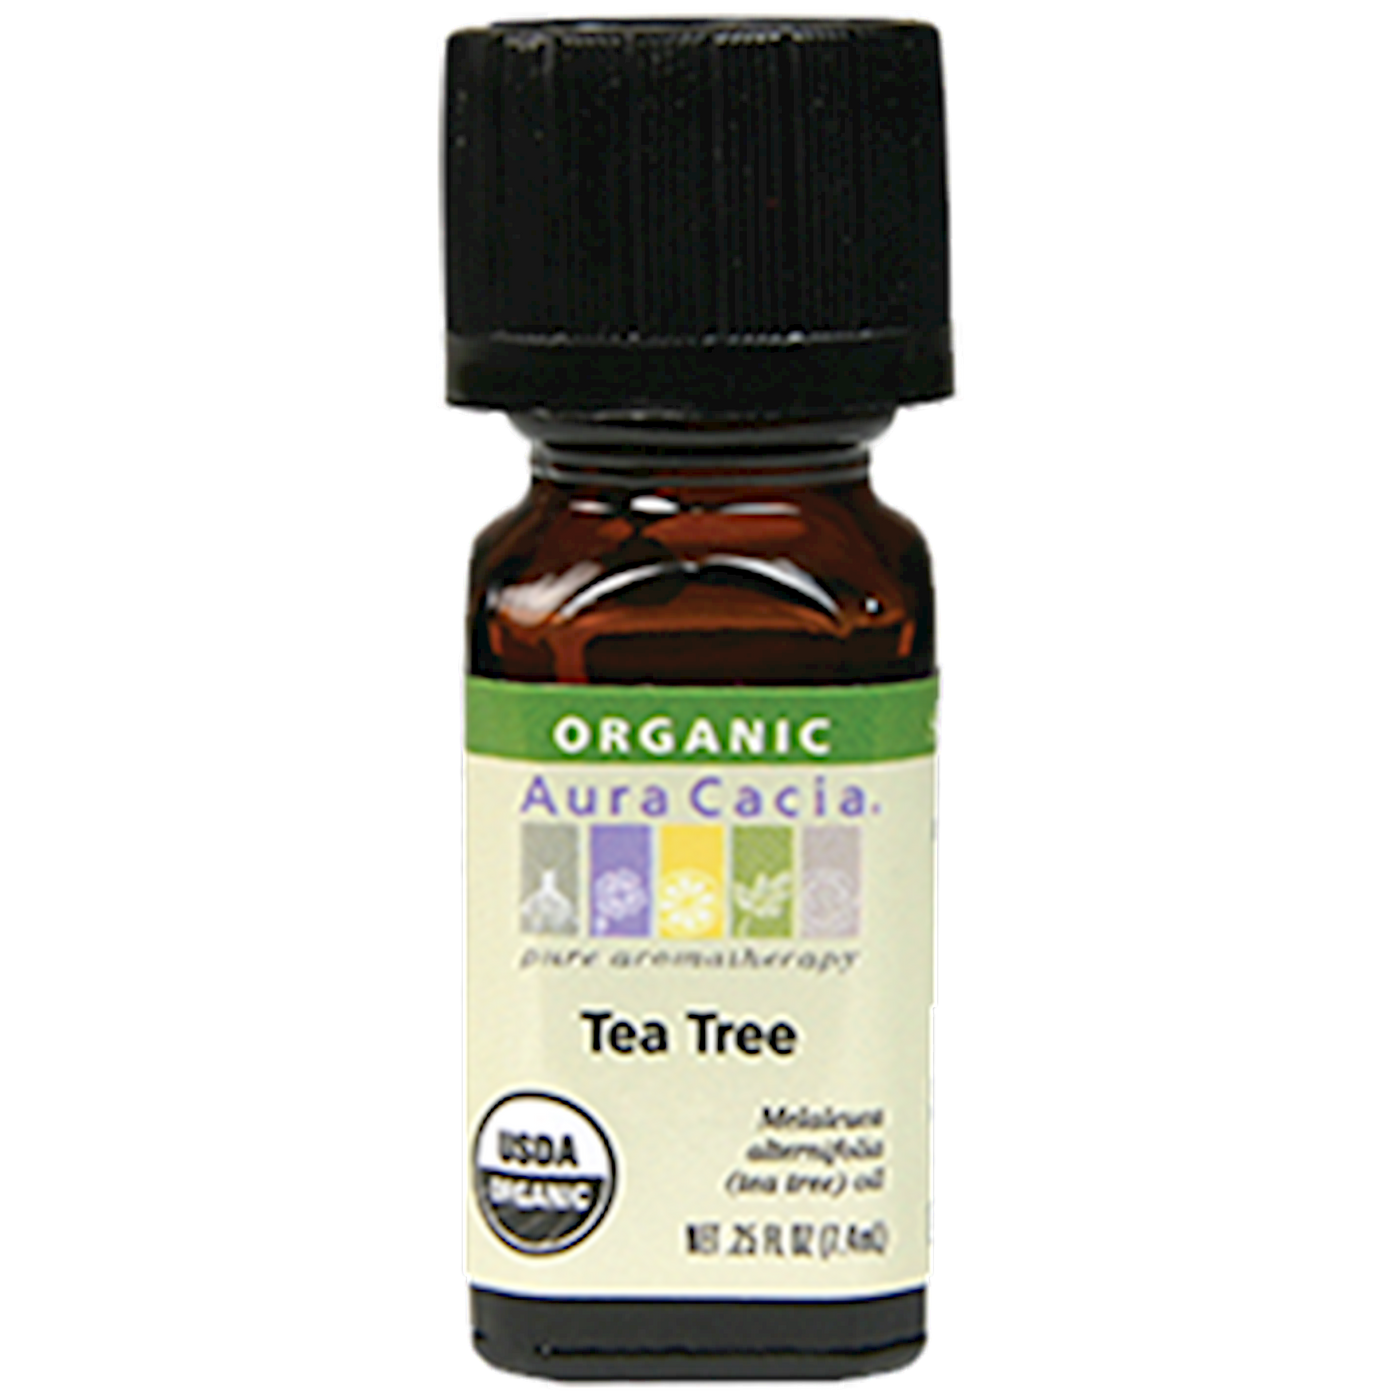 Tea Tree Organic Essential Oil .25 oz Curated Wellness